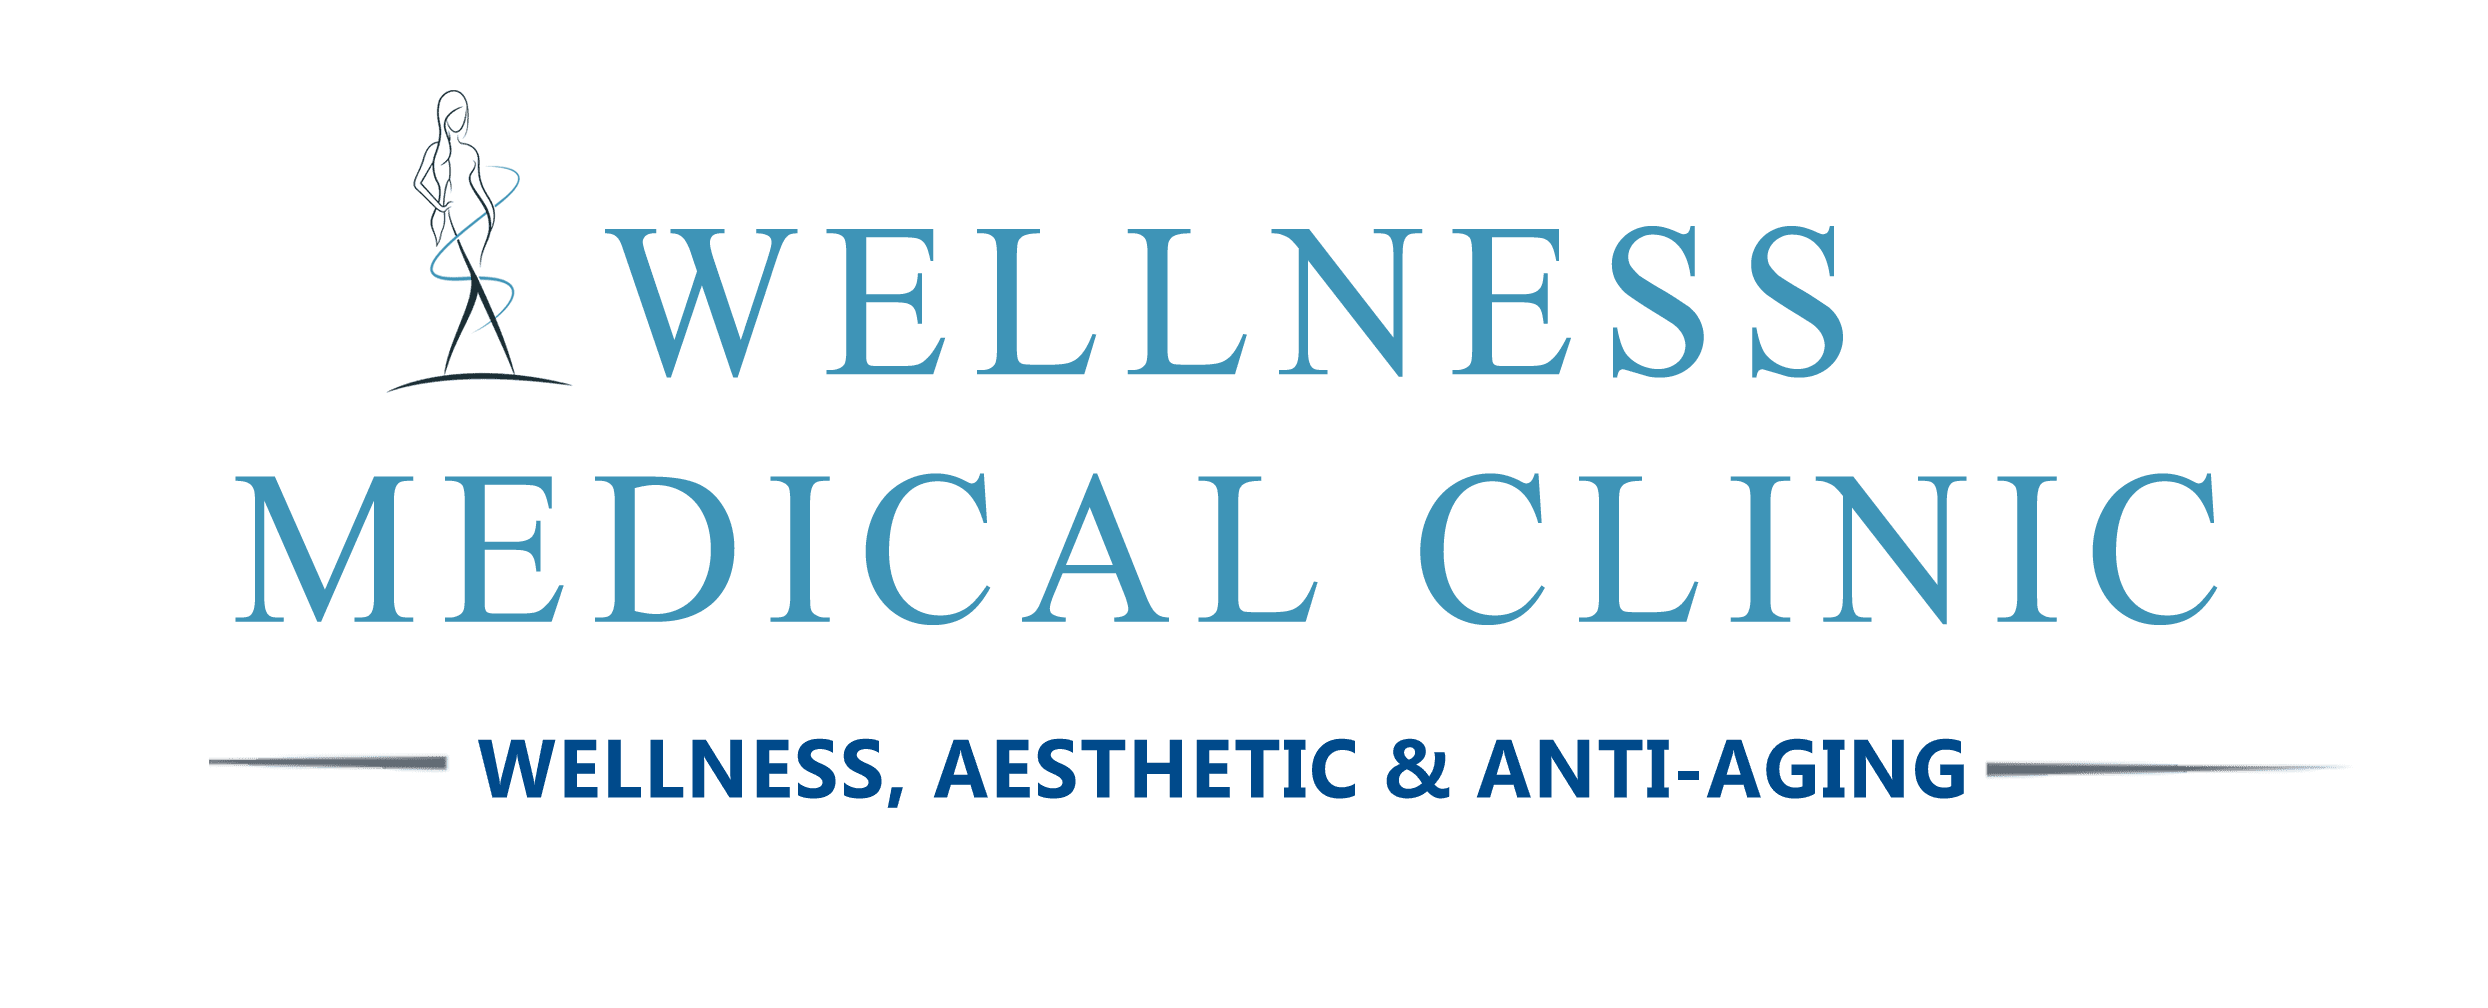 Wellness medical clinic logo.